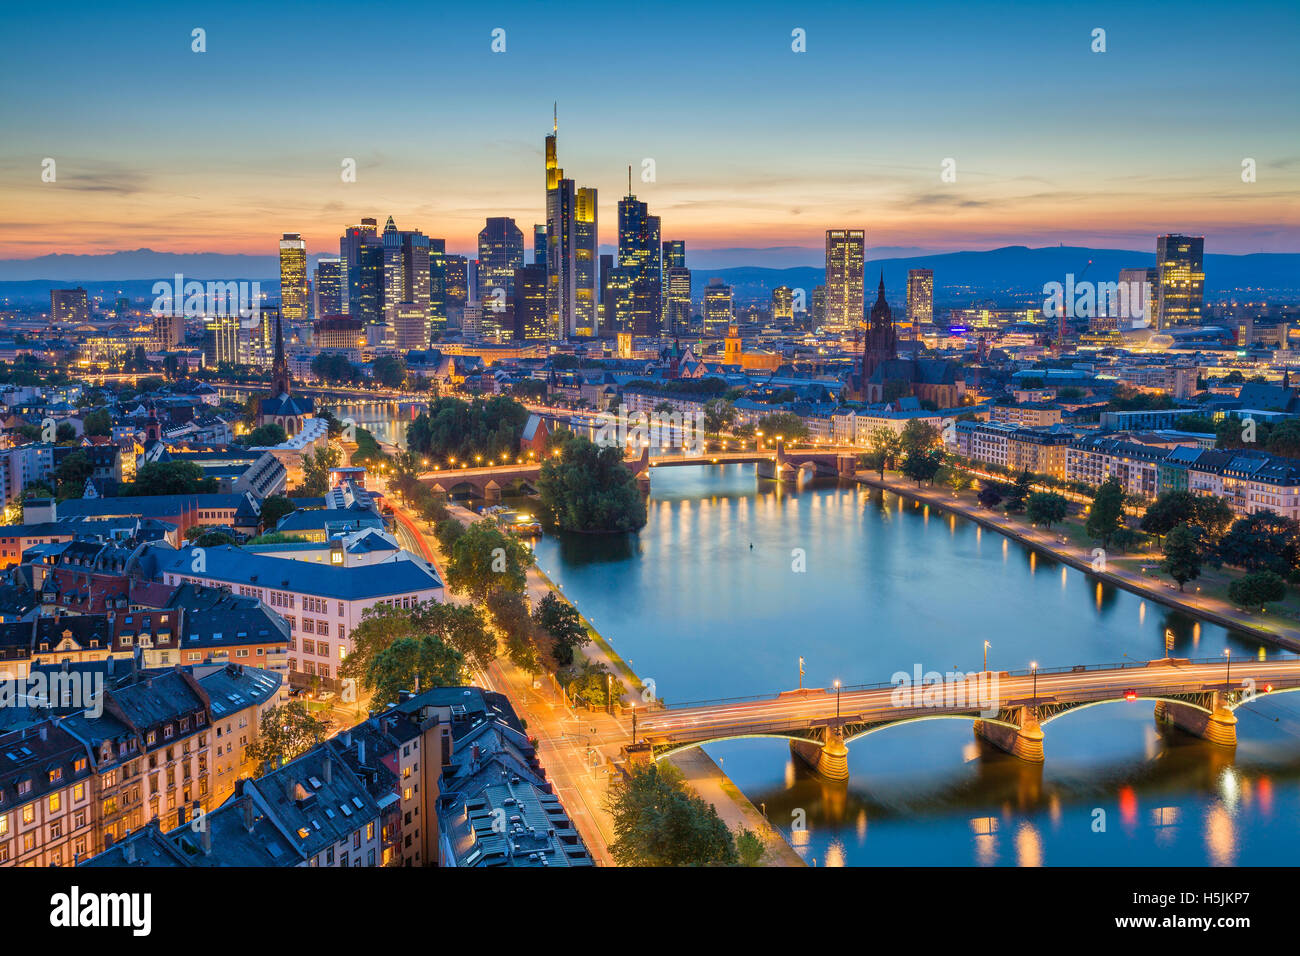 Frankfurt am Main. Immagine di Frankfurt am Main skyline durante il blu crepuscolo ora. Foto Stock